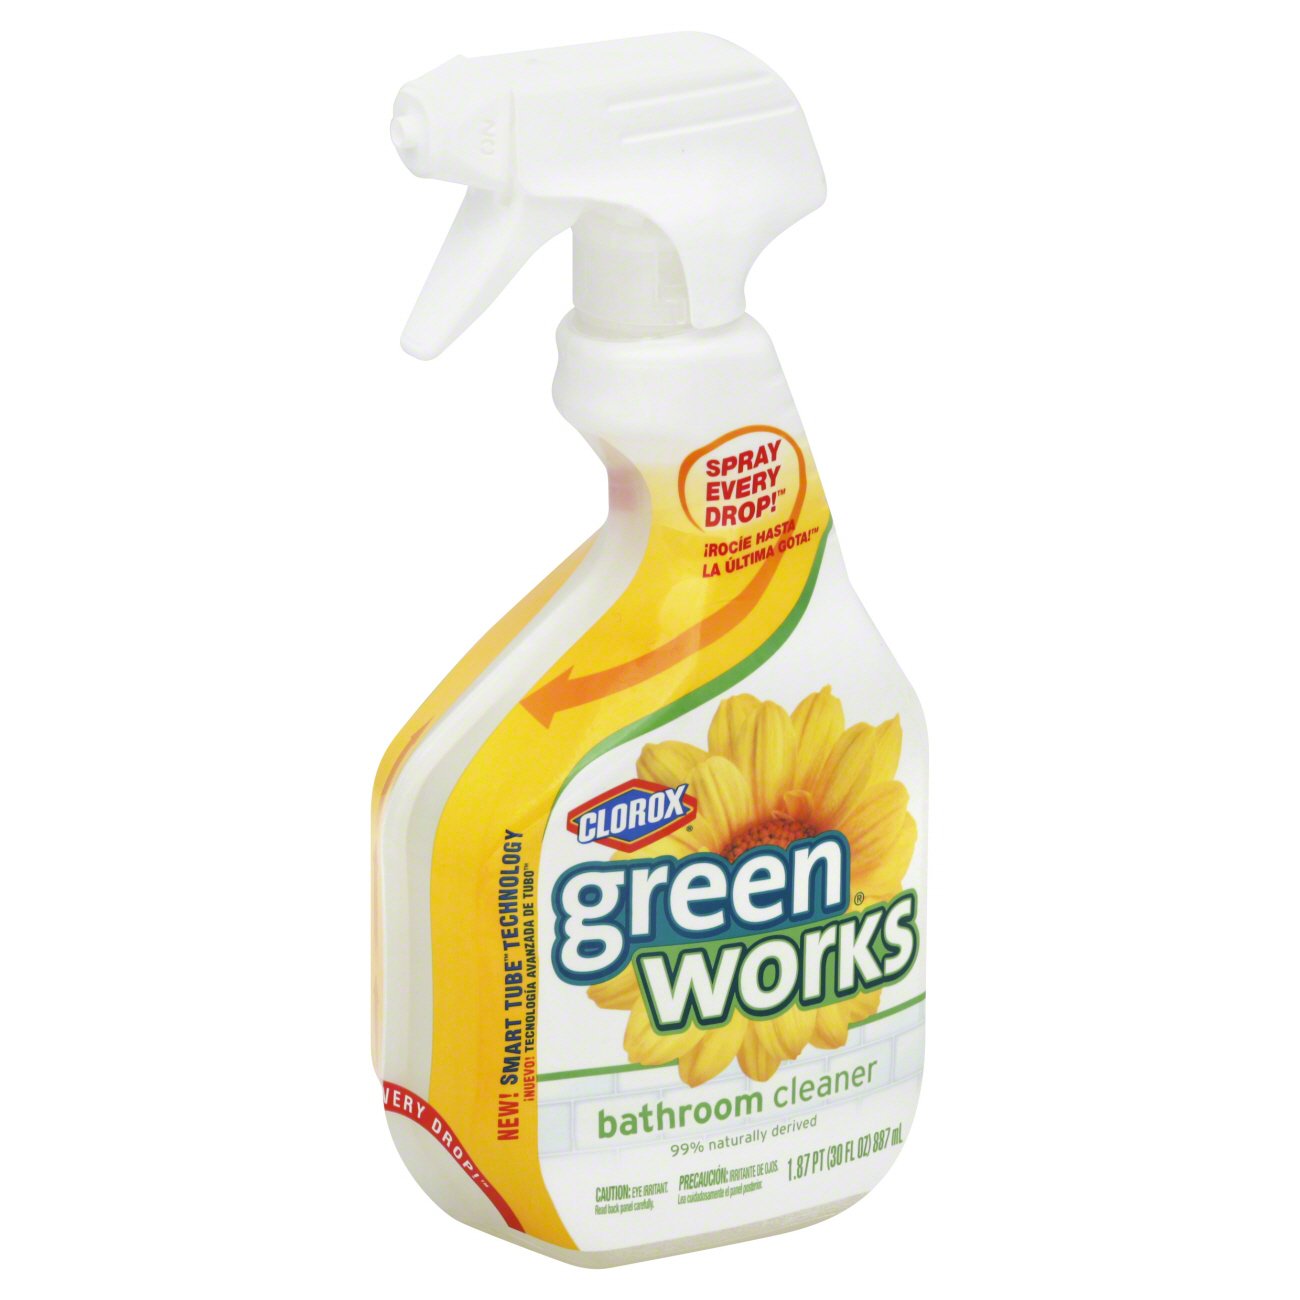 Clorox Green Works General Bathroom Cleaner Spray Shop